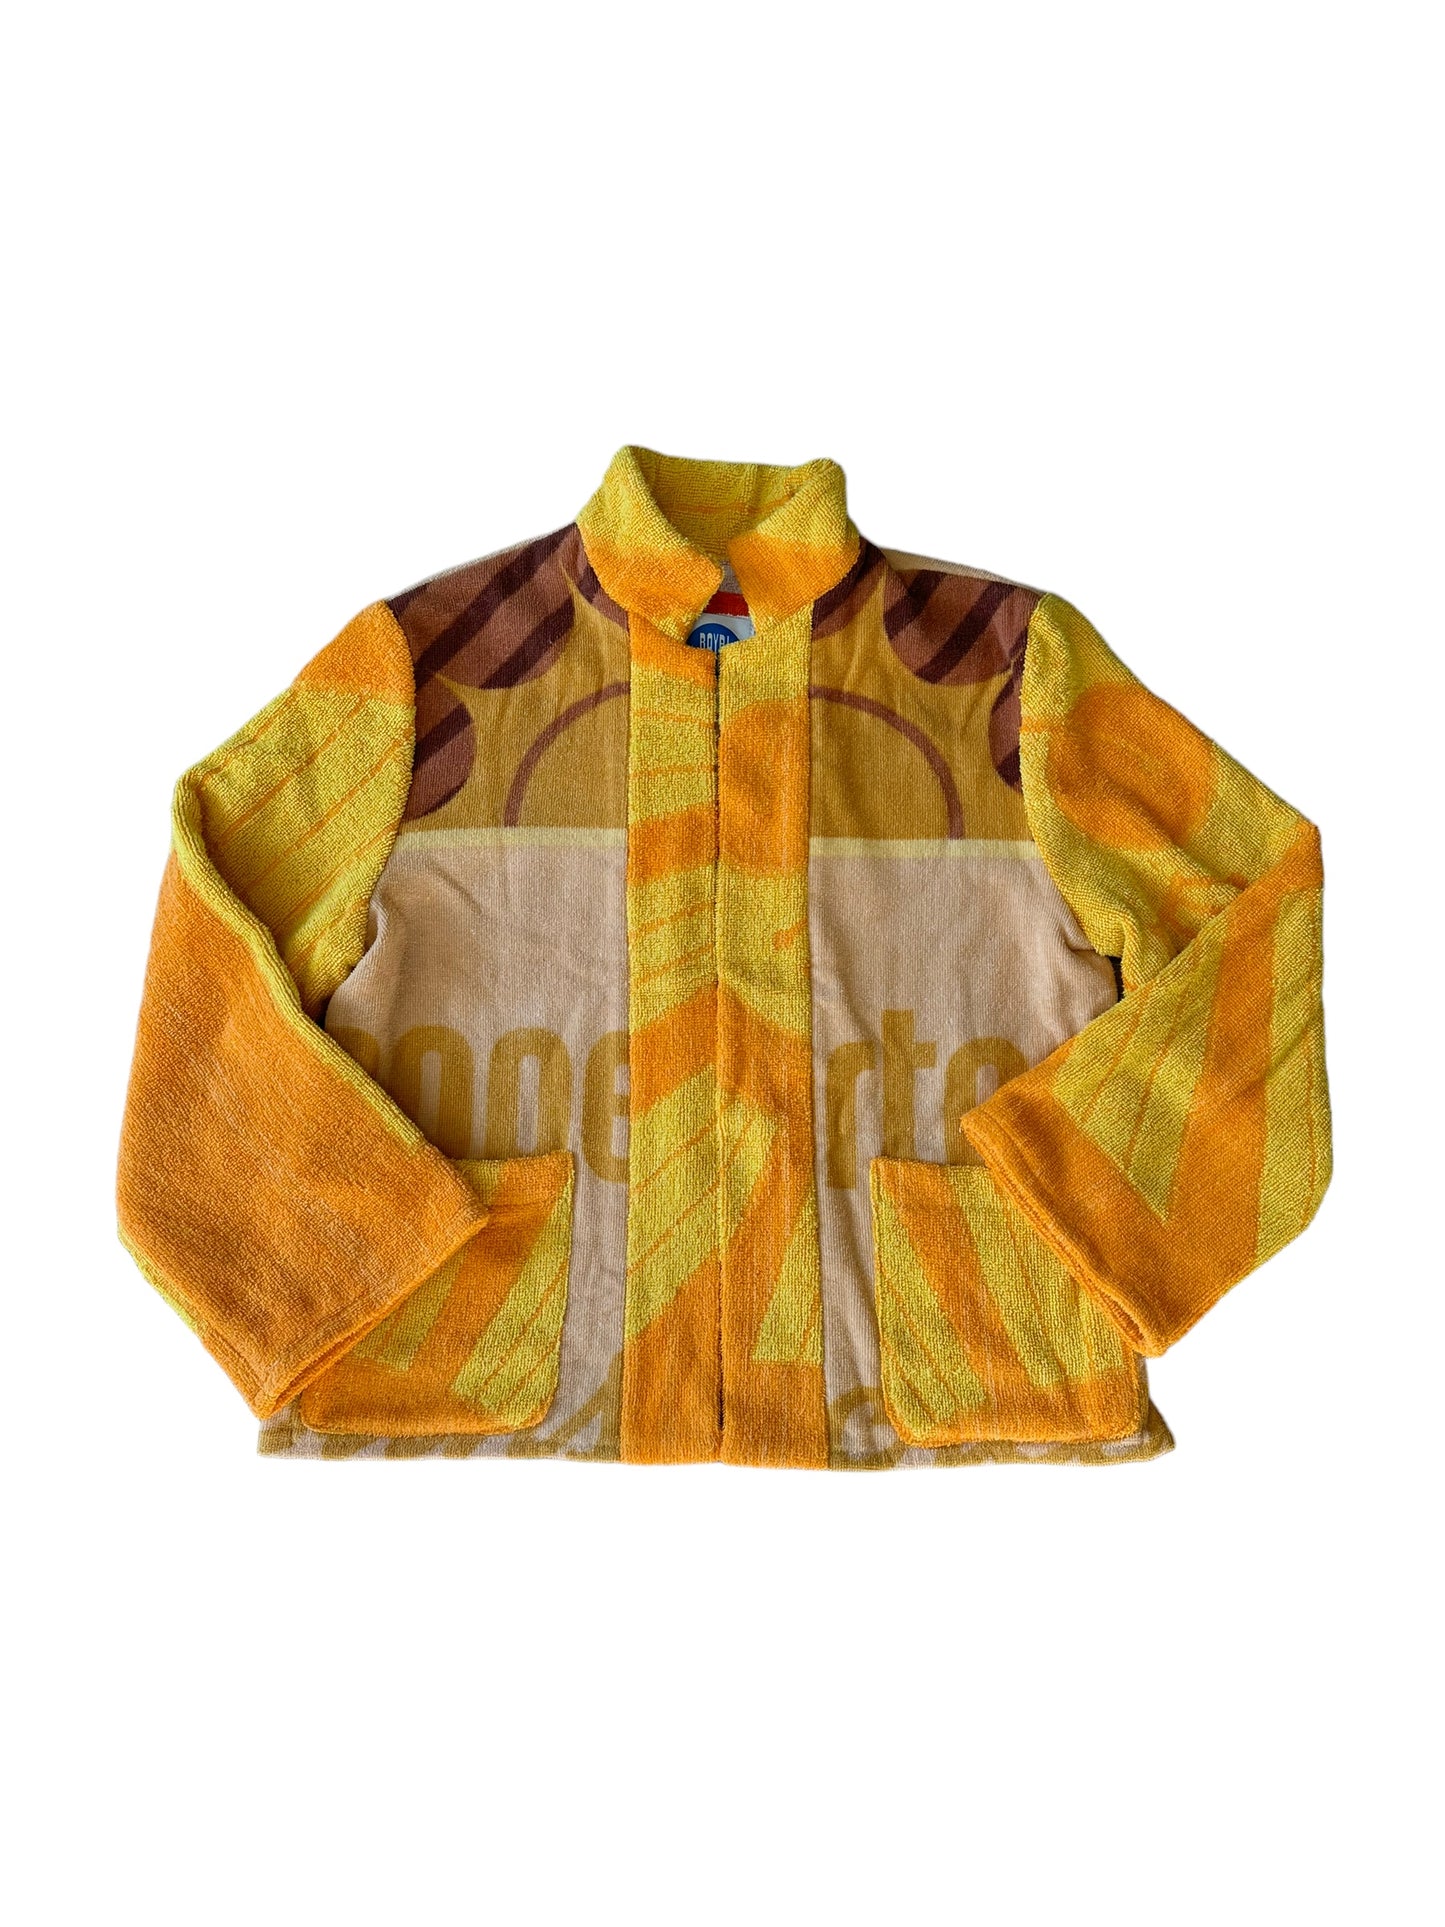 Regazza jacket in Coppertone Tan